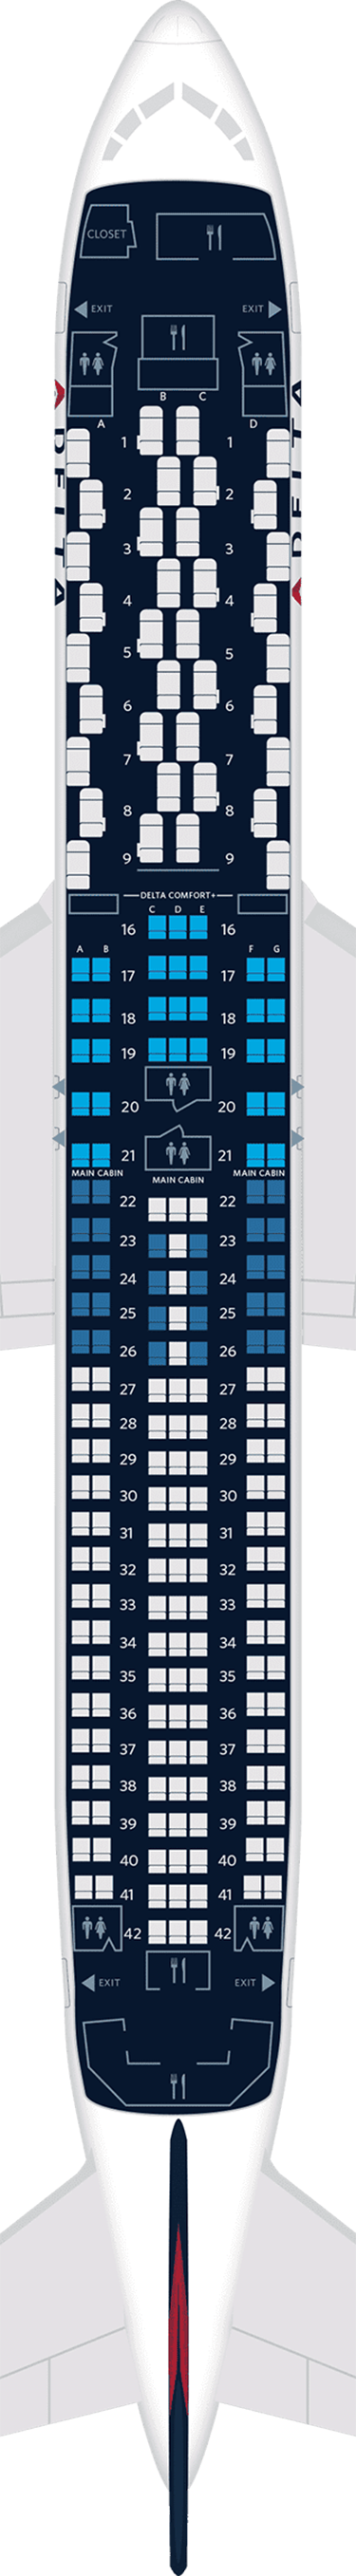 Delta Boeing 777 300er Seat Map | Brokeasshome.com